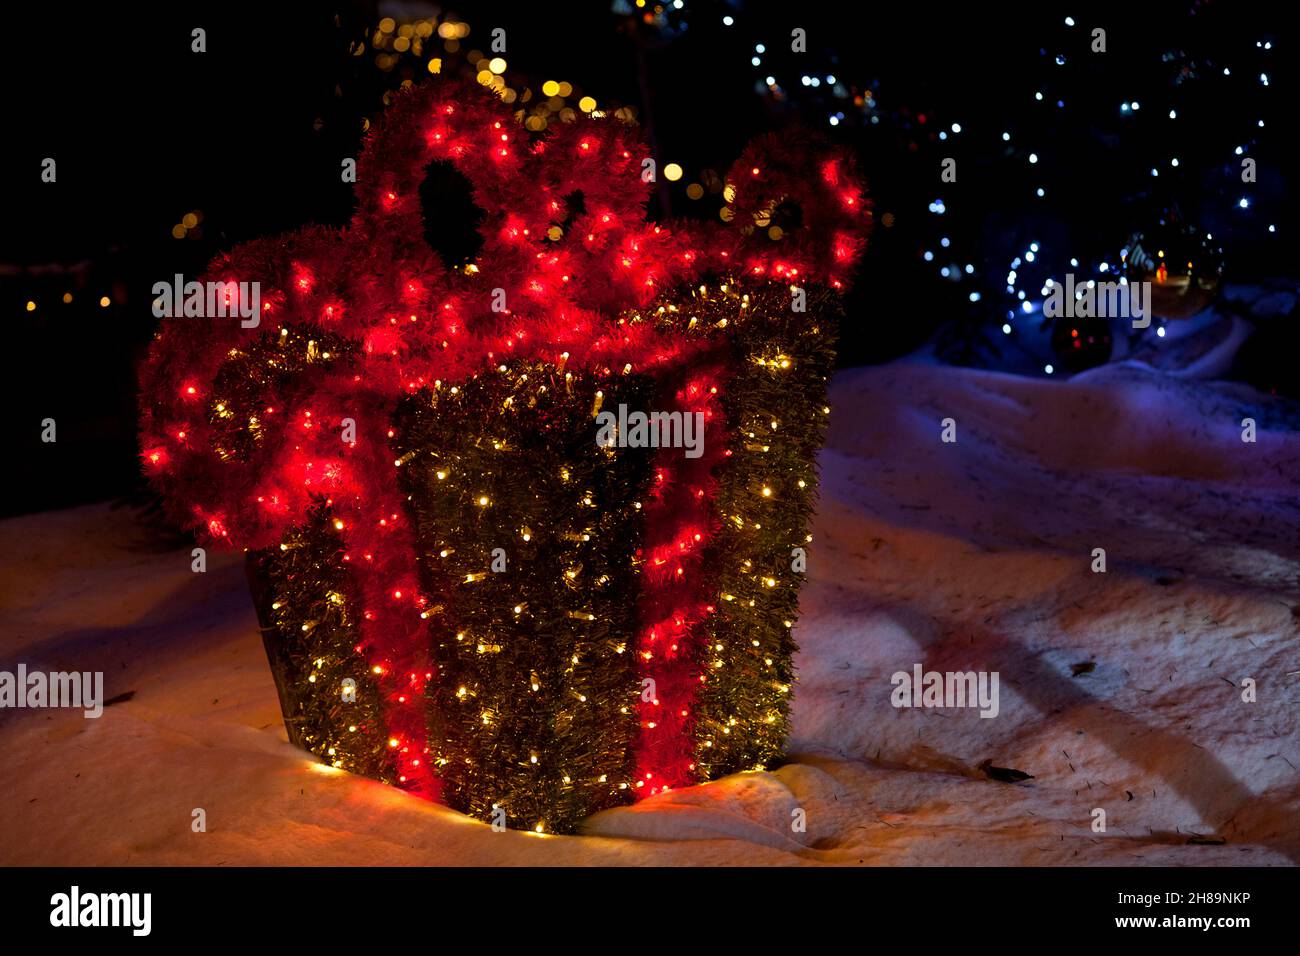 Outdoor illuminated Christmas decoration shaped like a wrapped gift box. Stock Photo